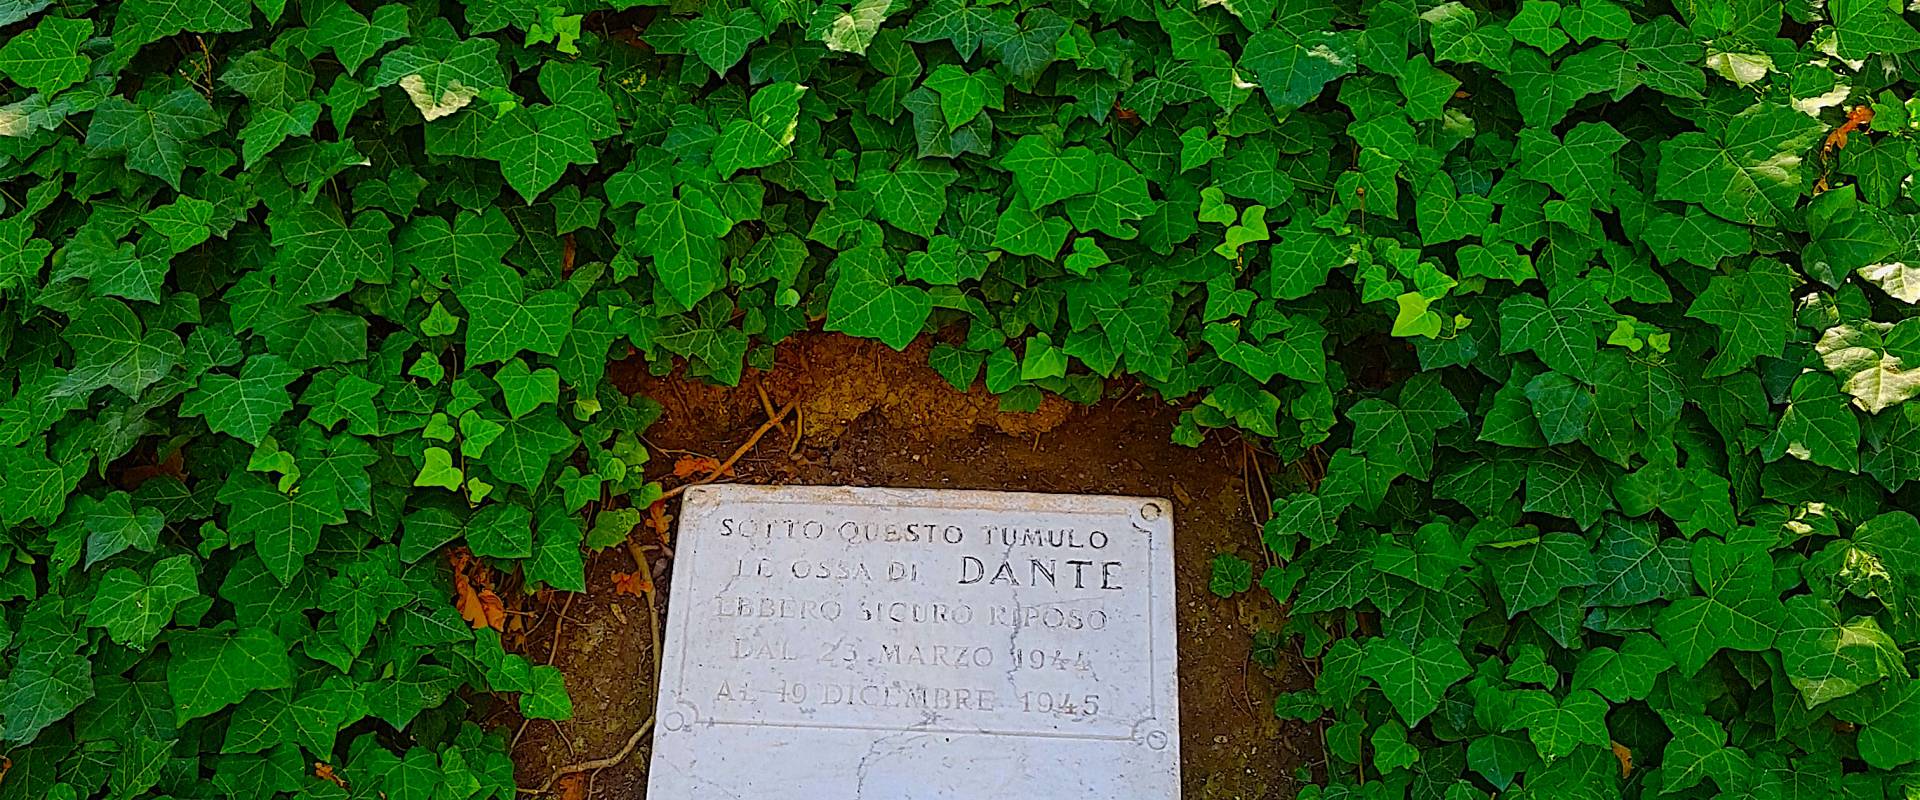 Tomba di Dante in giardino photo by Opi1010